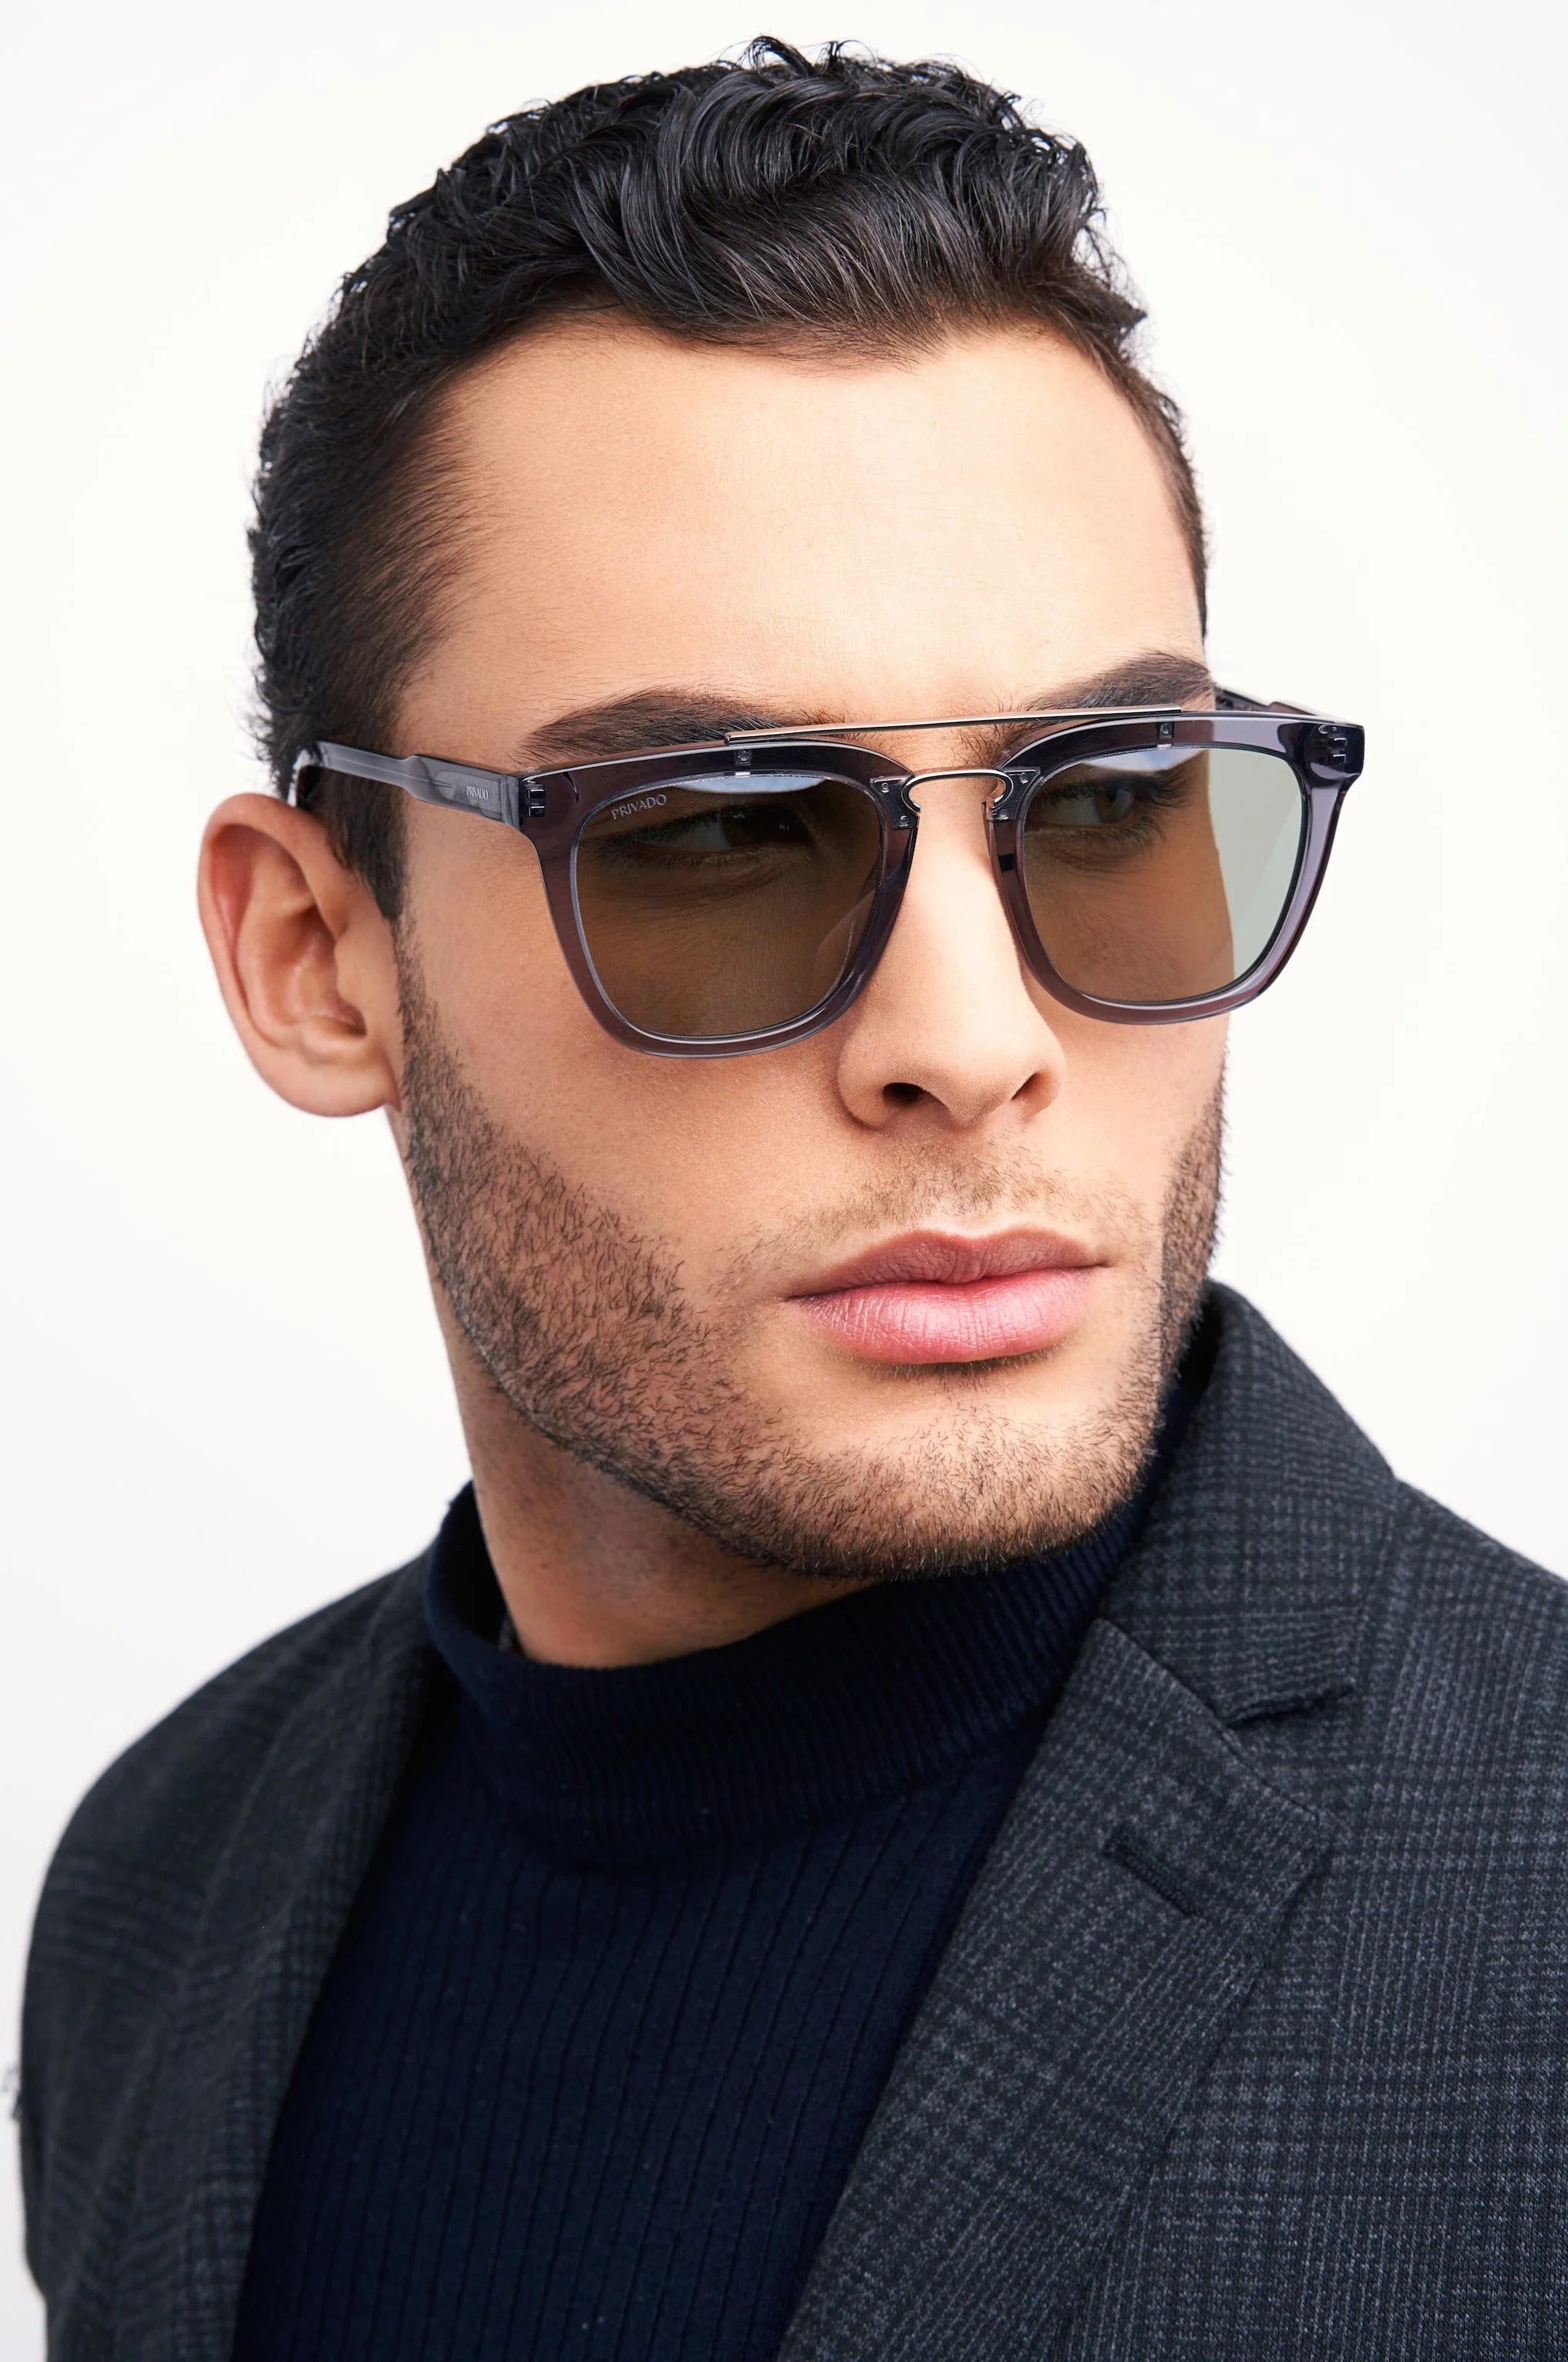 man in dark blazer and grey sunglasses